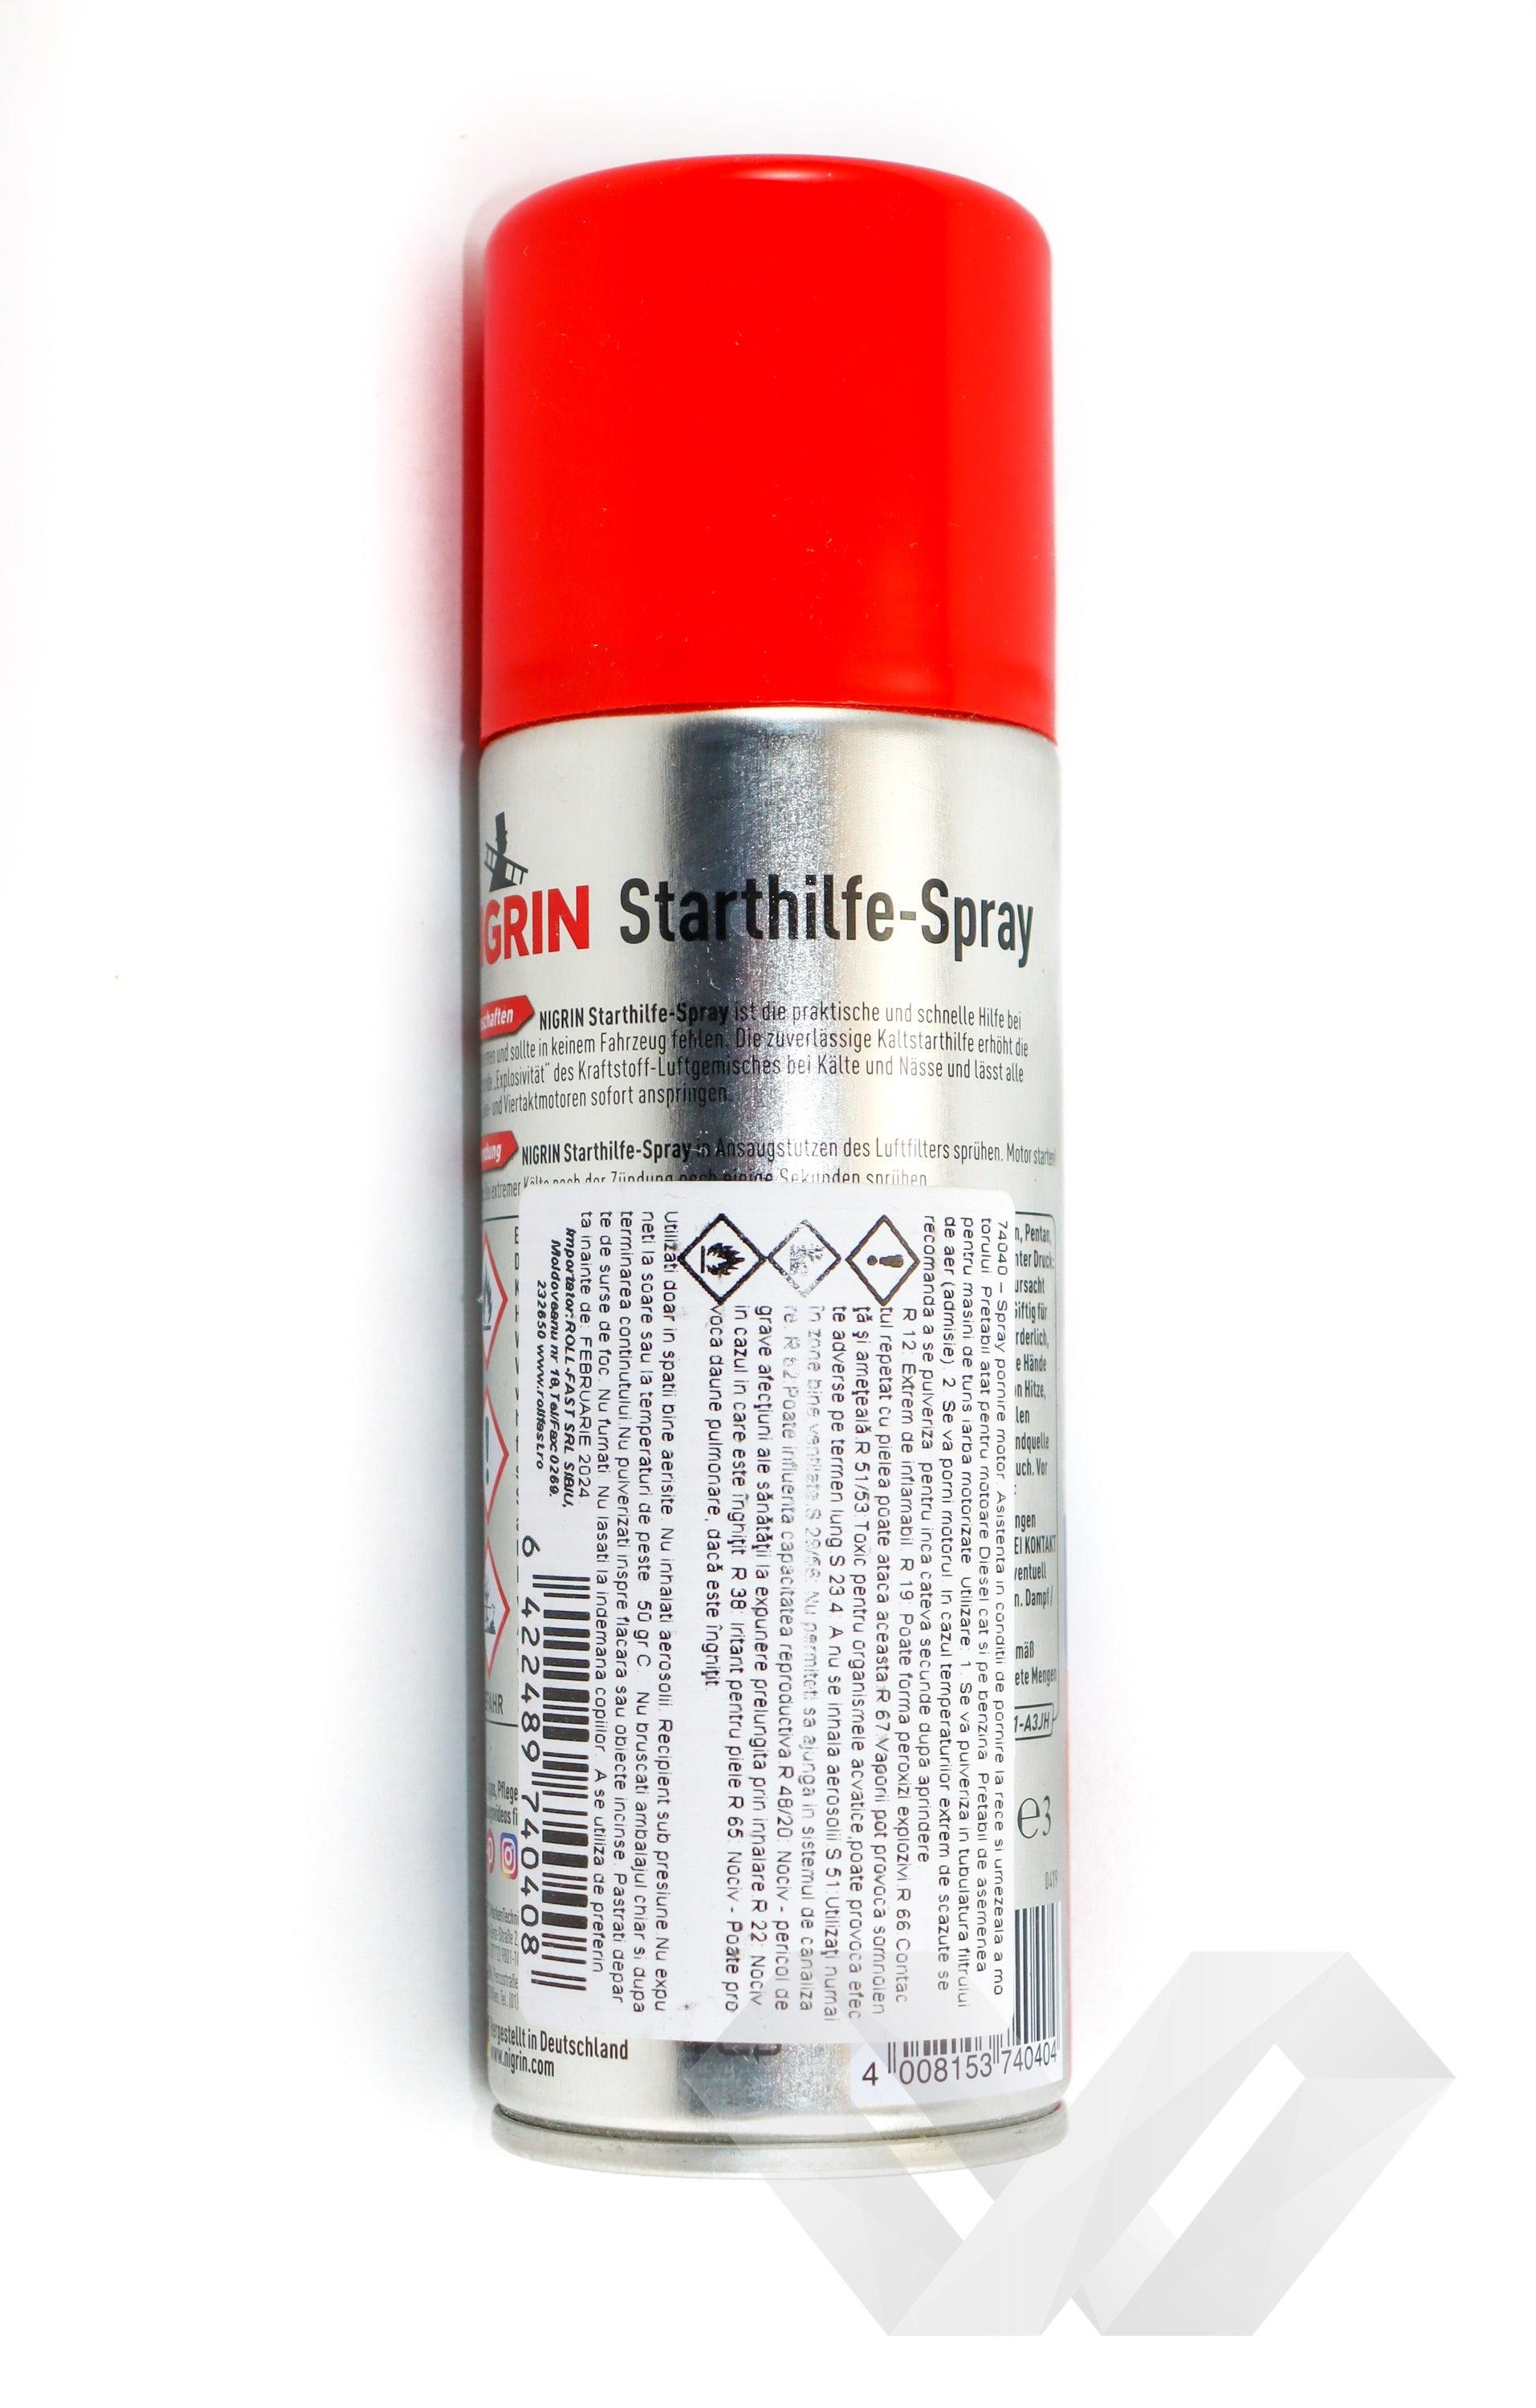 Spray pornire motor Nigrin, 200ml